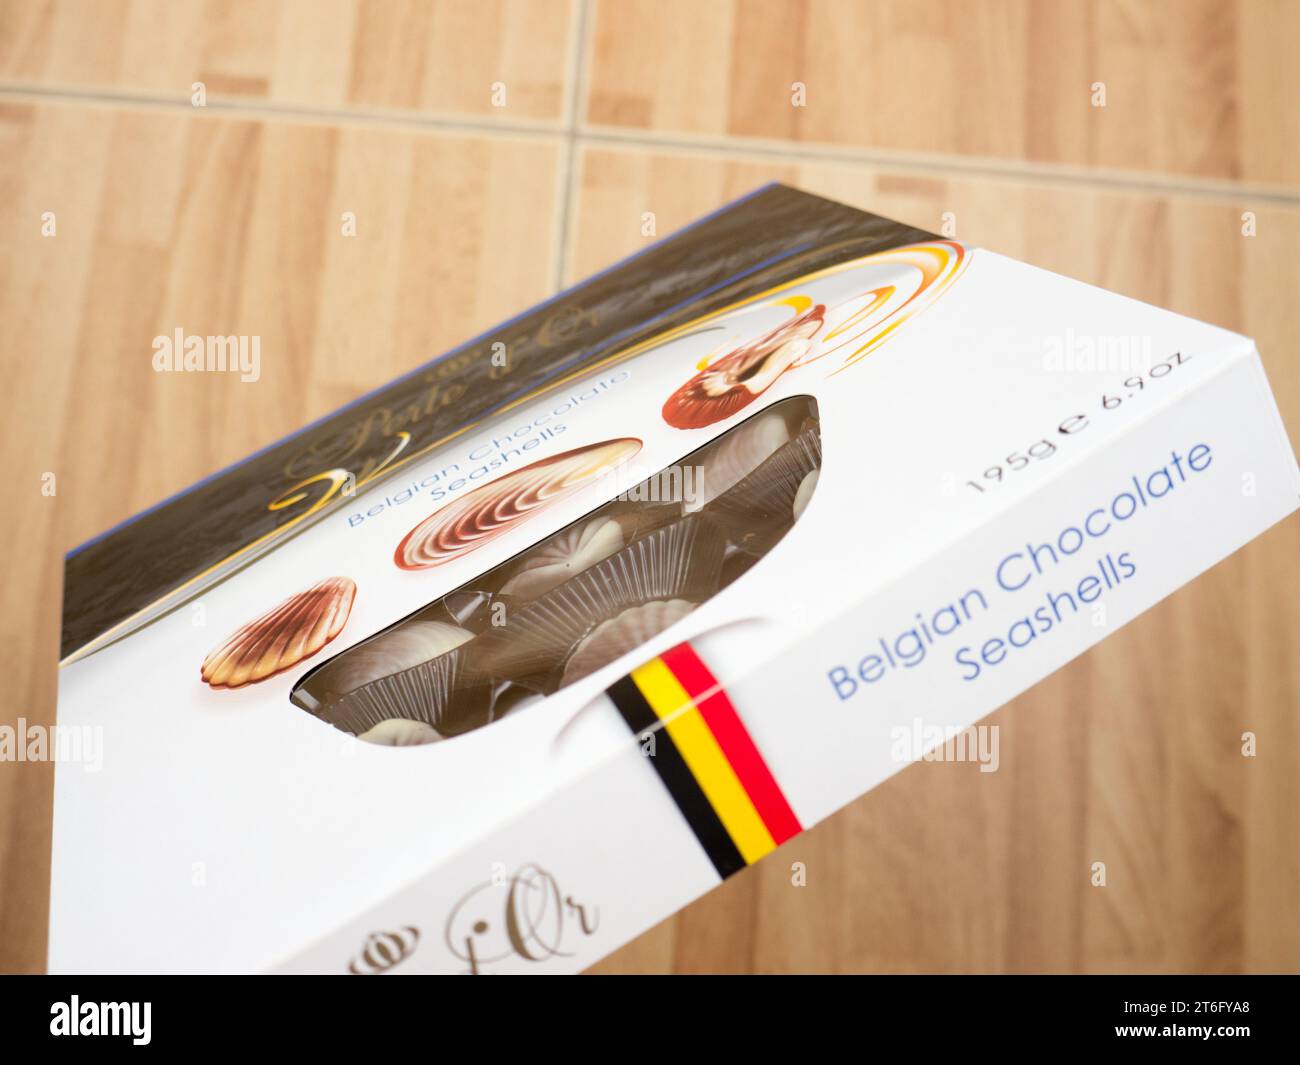 Belgian Chocolate Seashells by The Belgian Chocolate Group. Stock Photo